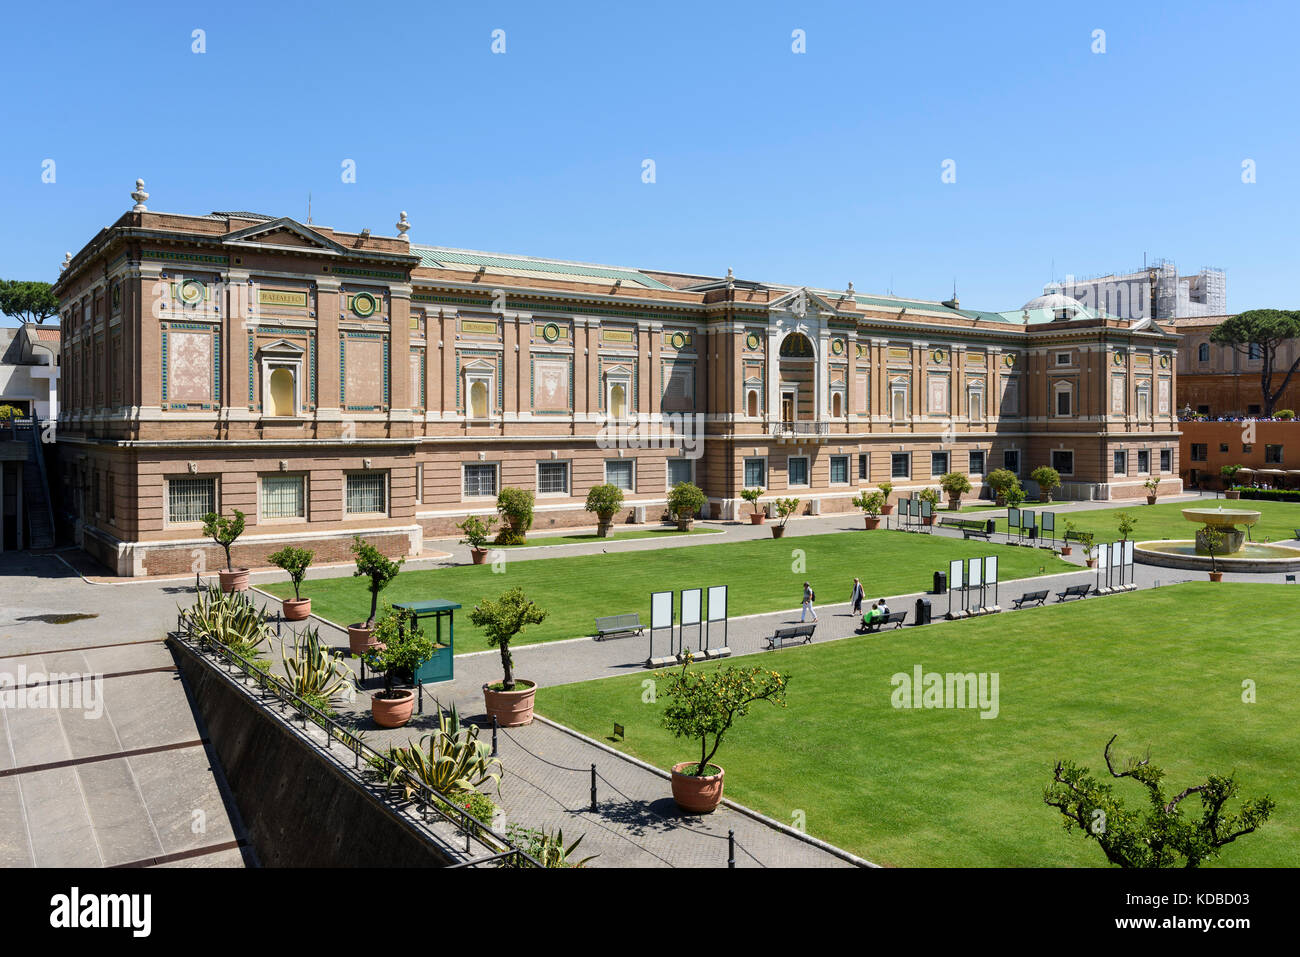 Rome. Italy. Pinacoteca Vaticana, (Vatican picture gallery), designed by Luca Beltrami (1854-1933), opened 1932. Vatican Museums. Musei Vaticani. Stock Photo